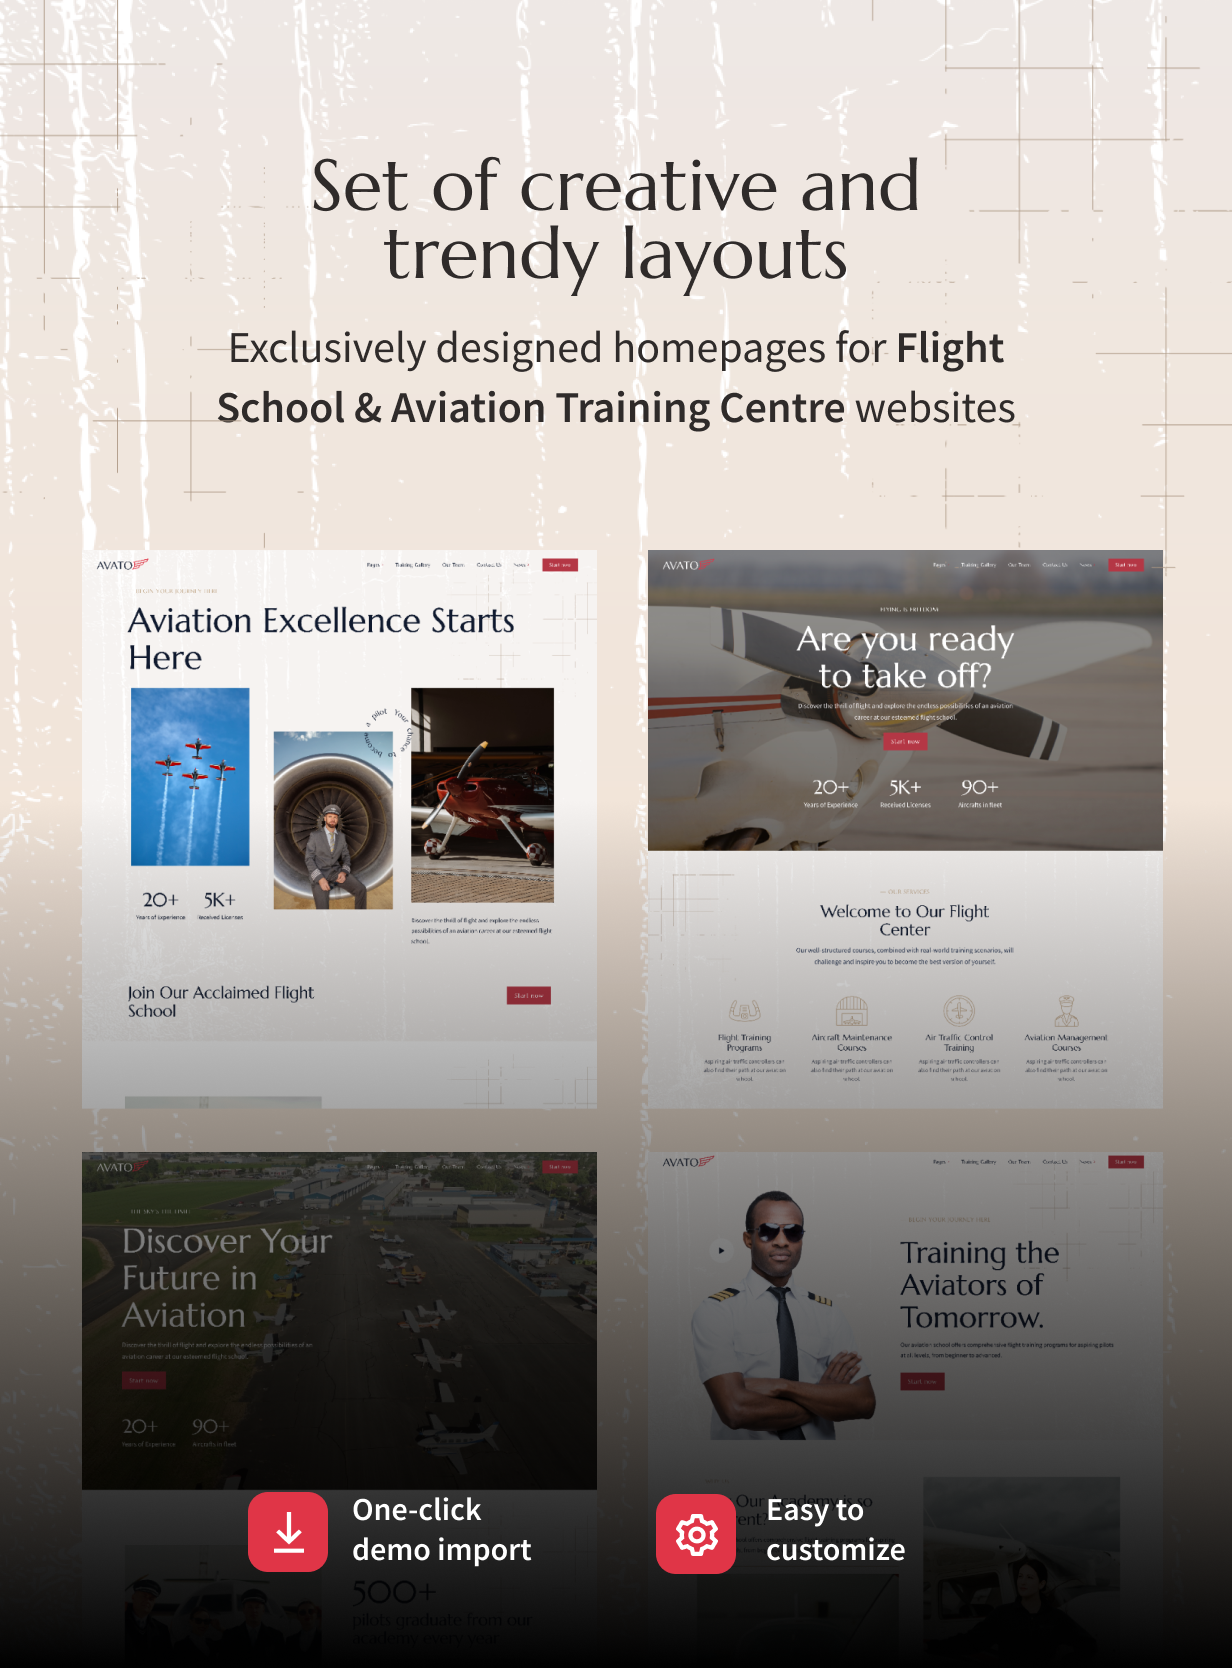 Avato - Flight School & Aviation Training Centre WordPress Theme